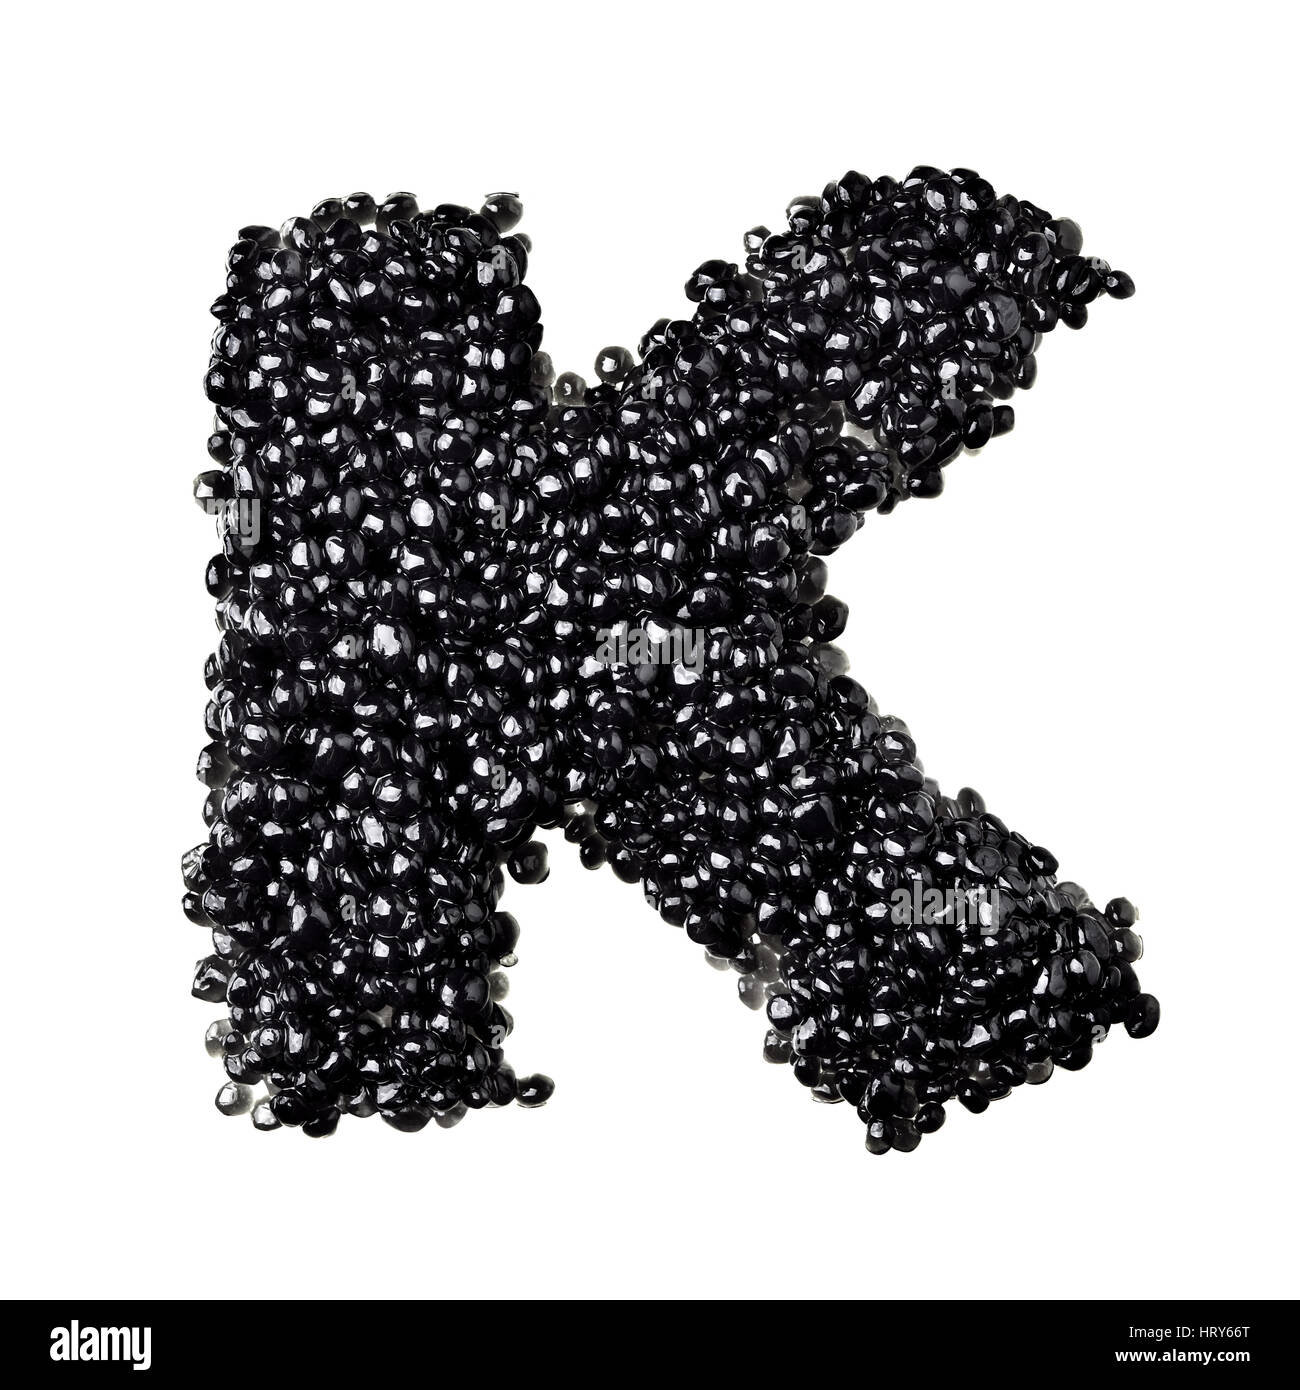 K - Alphabet made from black caviar Stock Photo